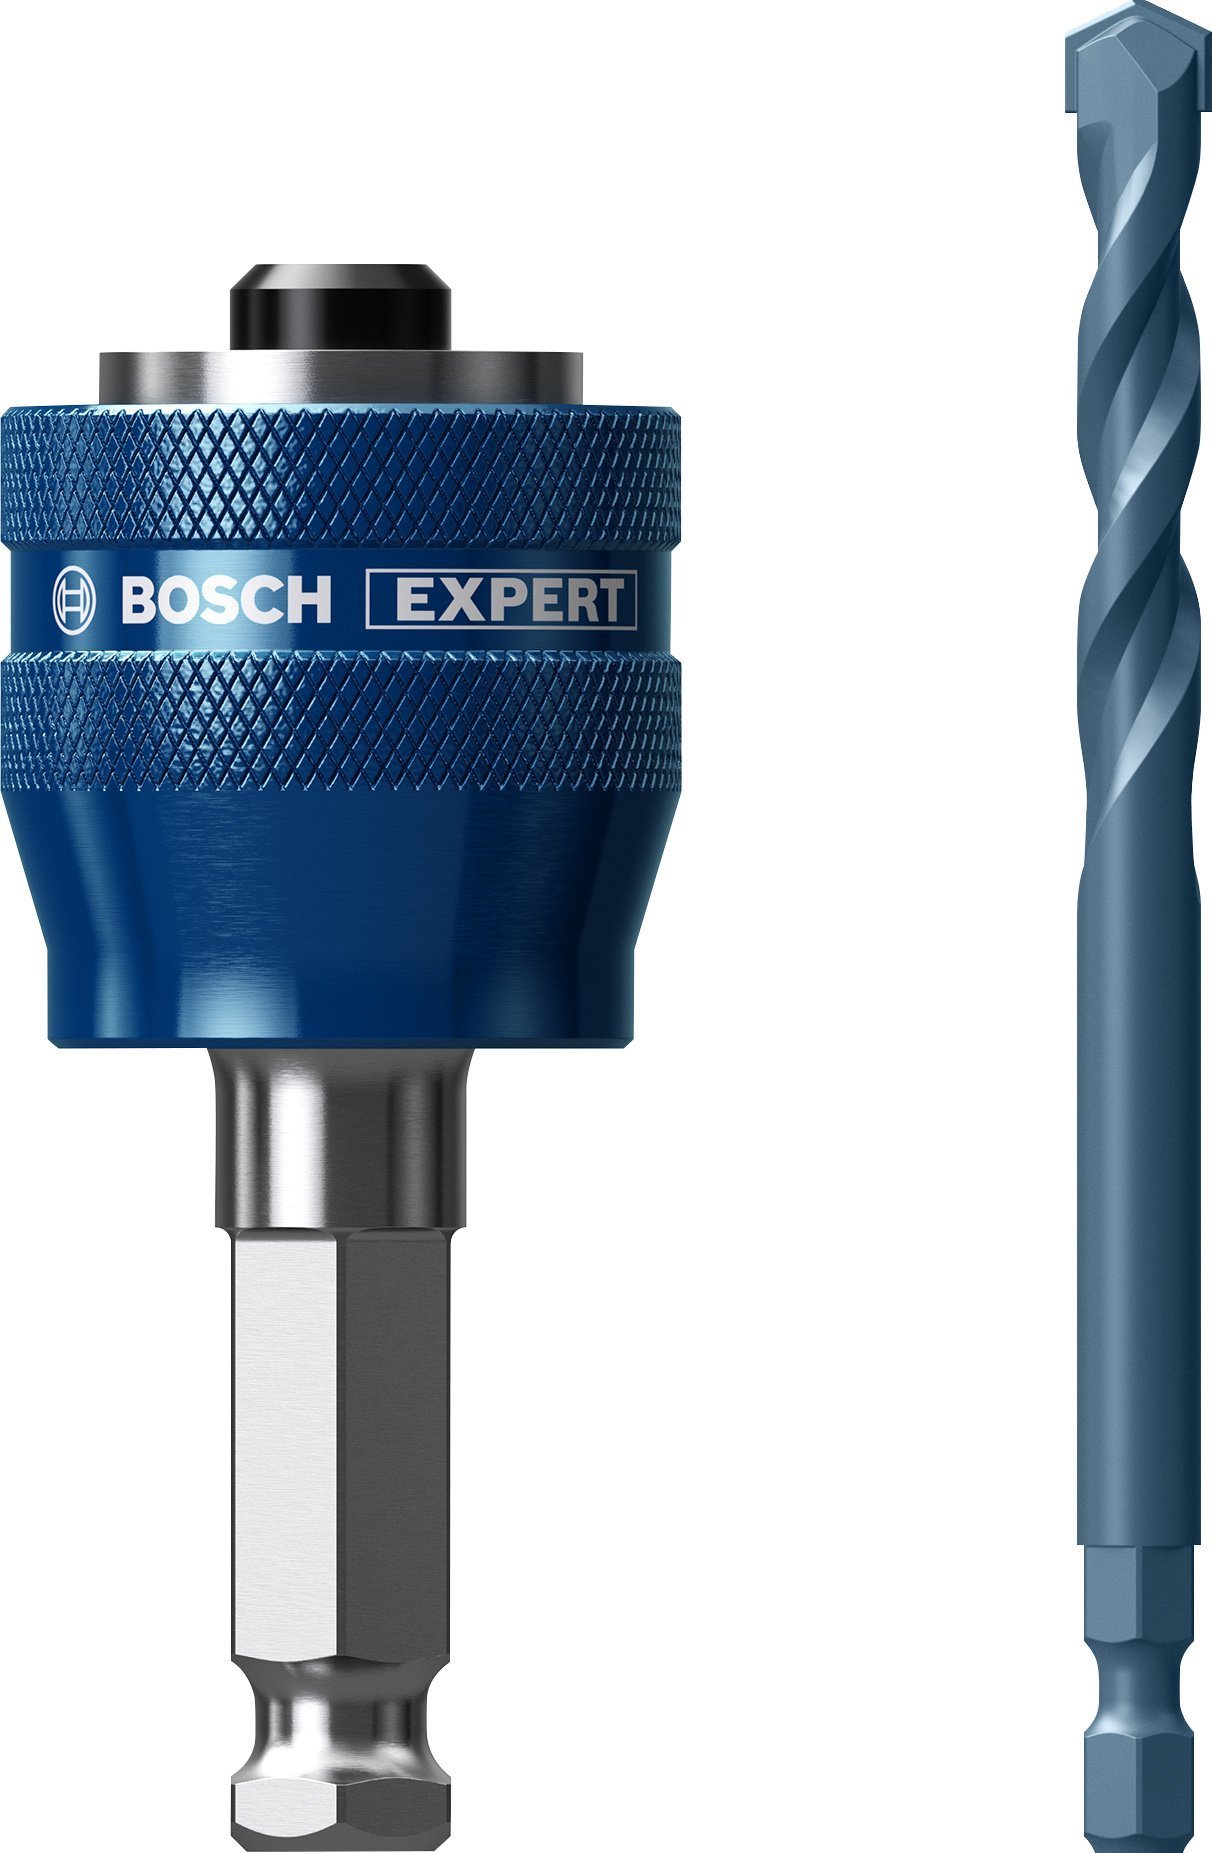 Adaptor Bosch pentru sistemele EXPERT Power Change Plus de 11 mm